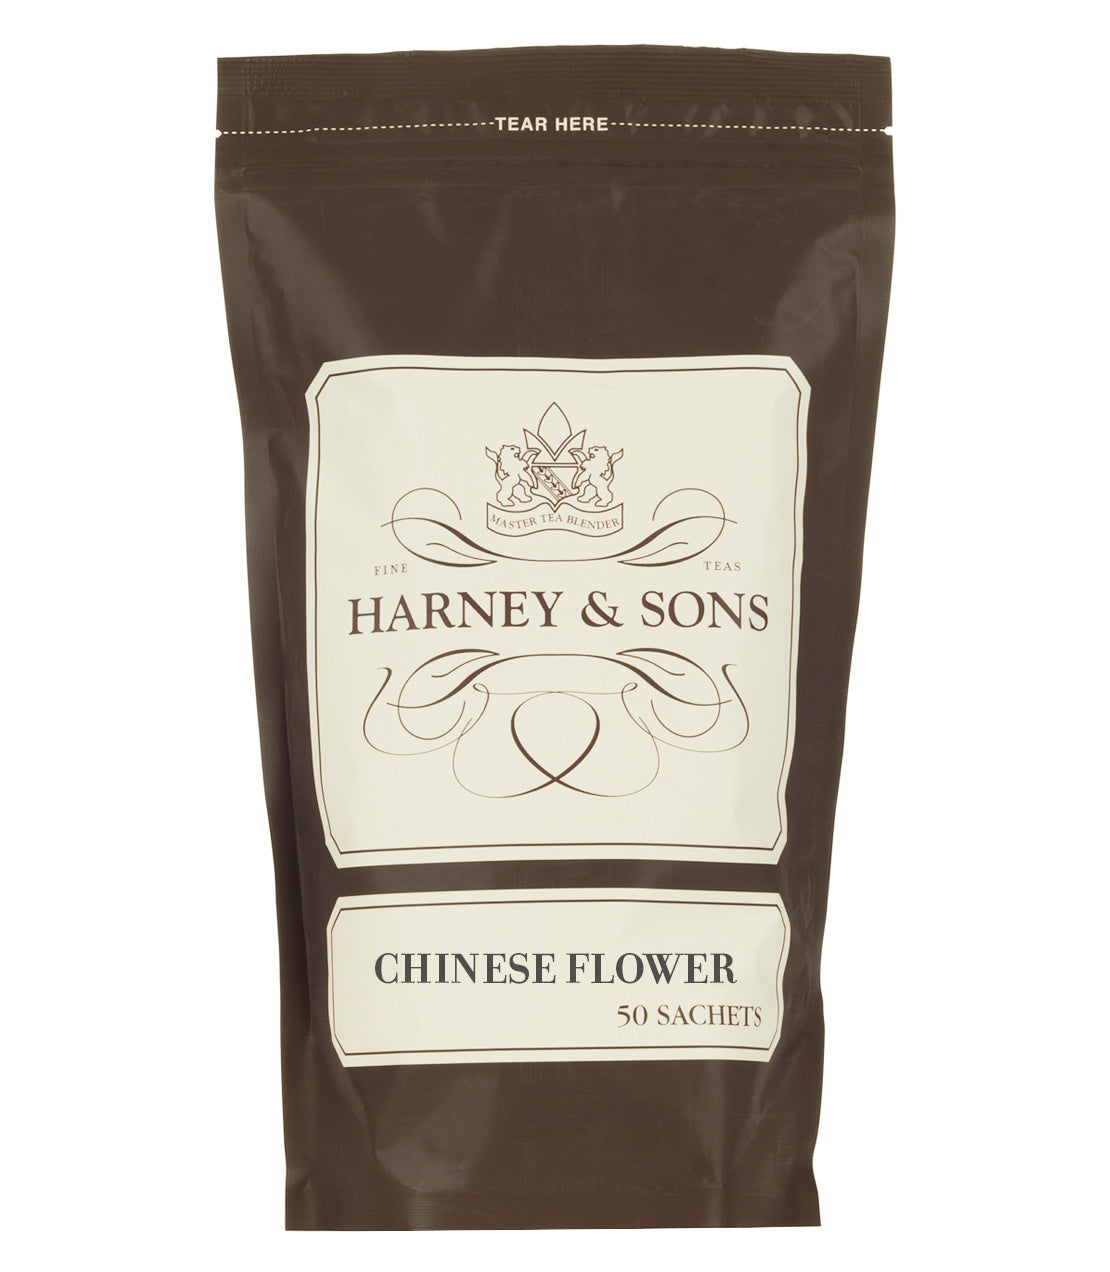 Chinese Flower - Sachets Bag of 50 Sachets - Harney & Sons Fine Teas